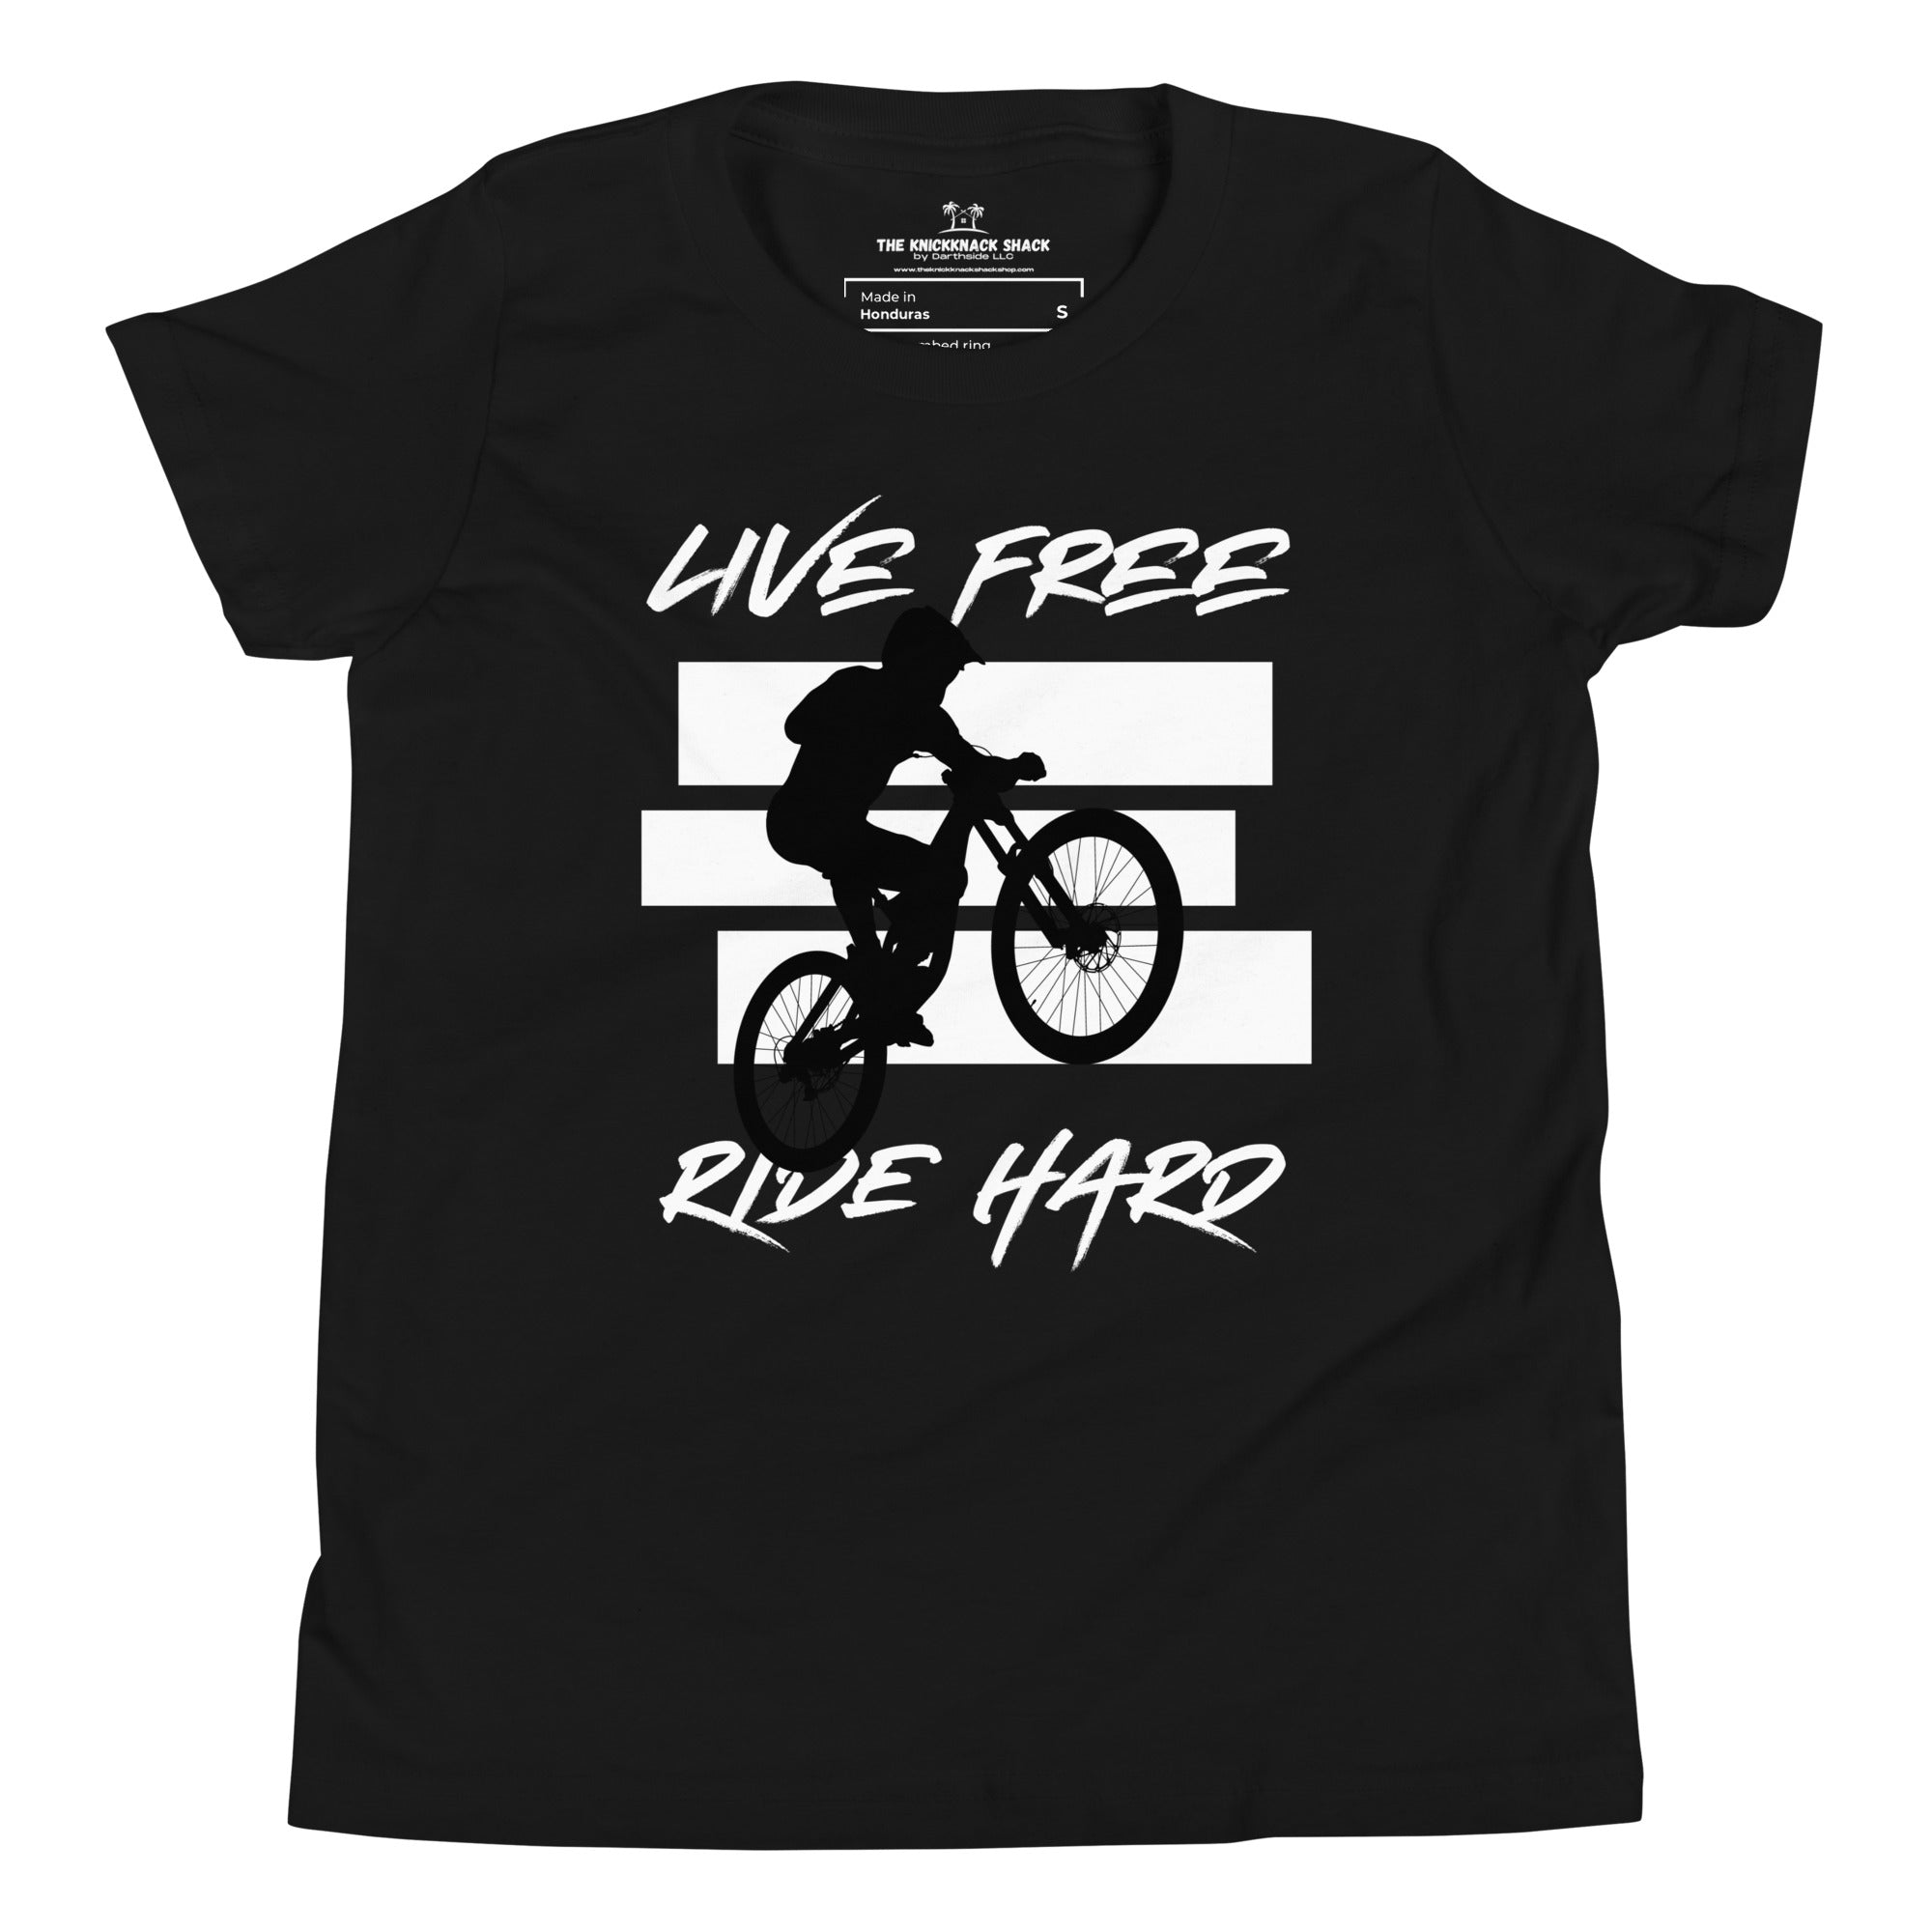 Camiseta juvenil - Live Free Ride Hard (colores oscuros)